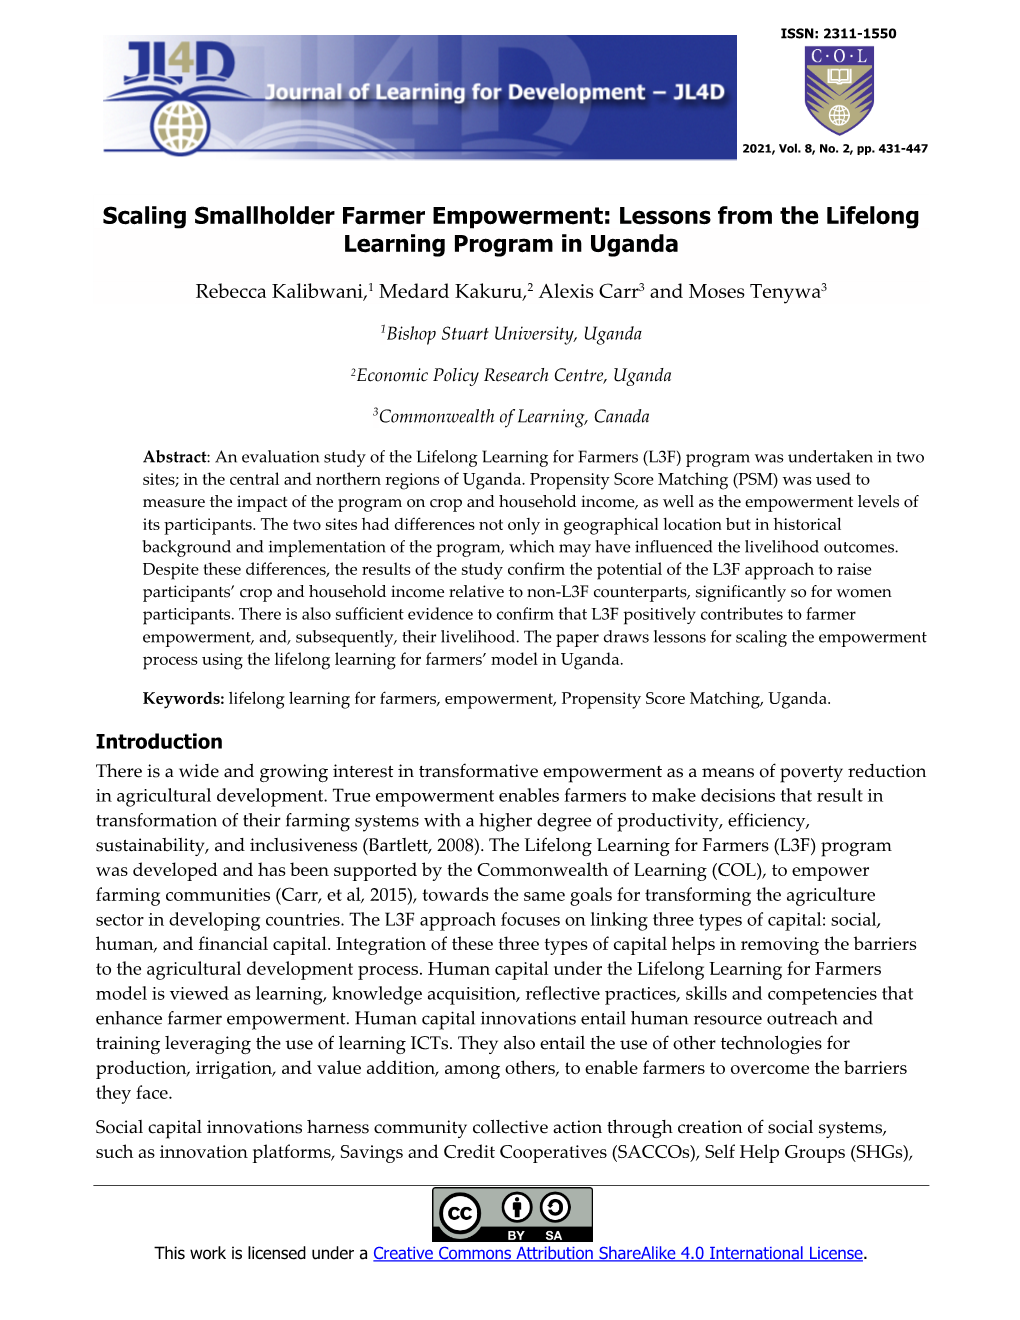 Scaling Smallholder Farmer Empowerment: Lessons from the Lifelong Learning Program in Uganda